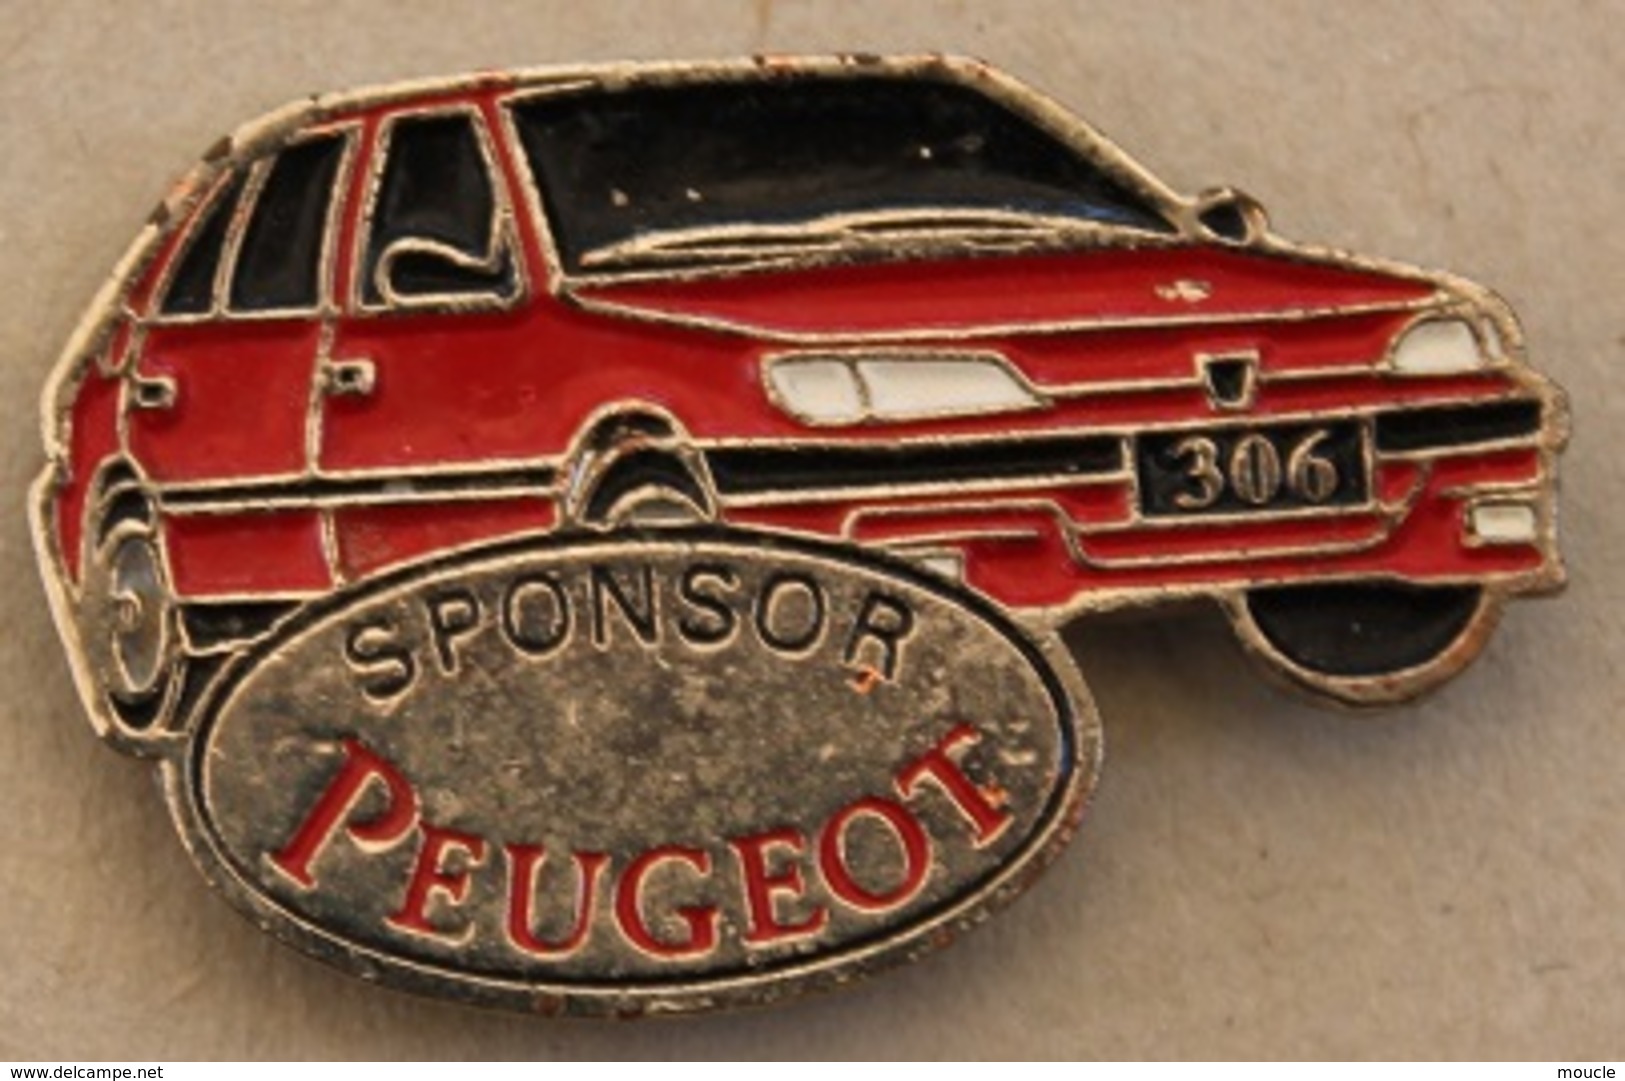 PEUGEOT 306 ROUGE - SPONSOR - VOITURE - FRENCH CAR -           (20) - Peugeot